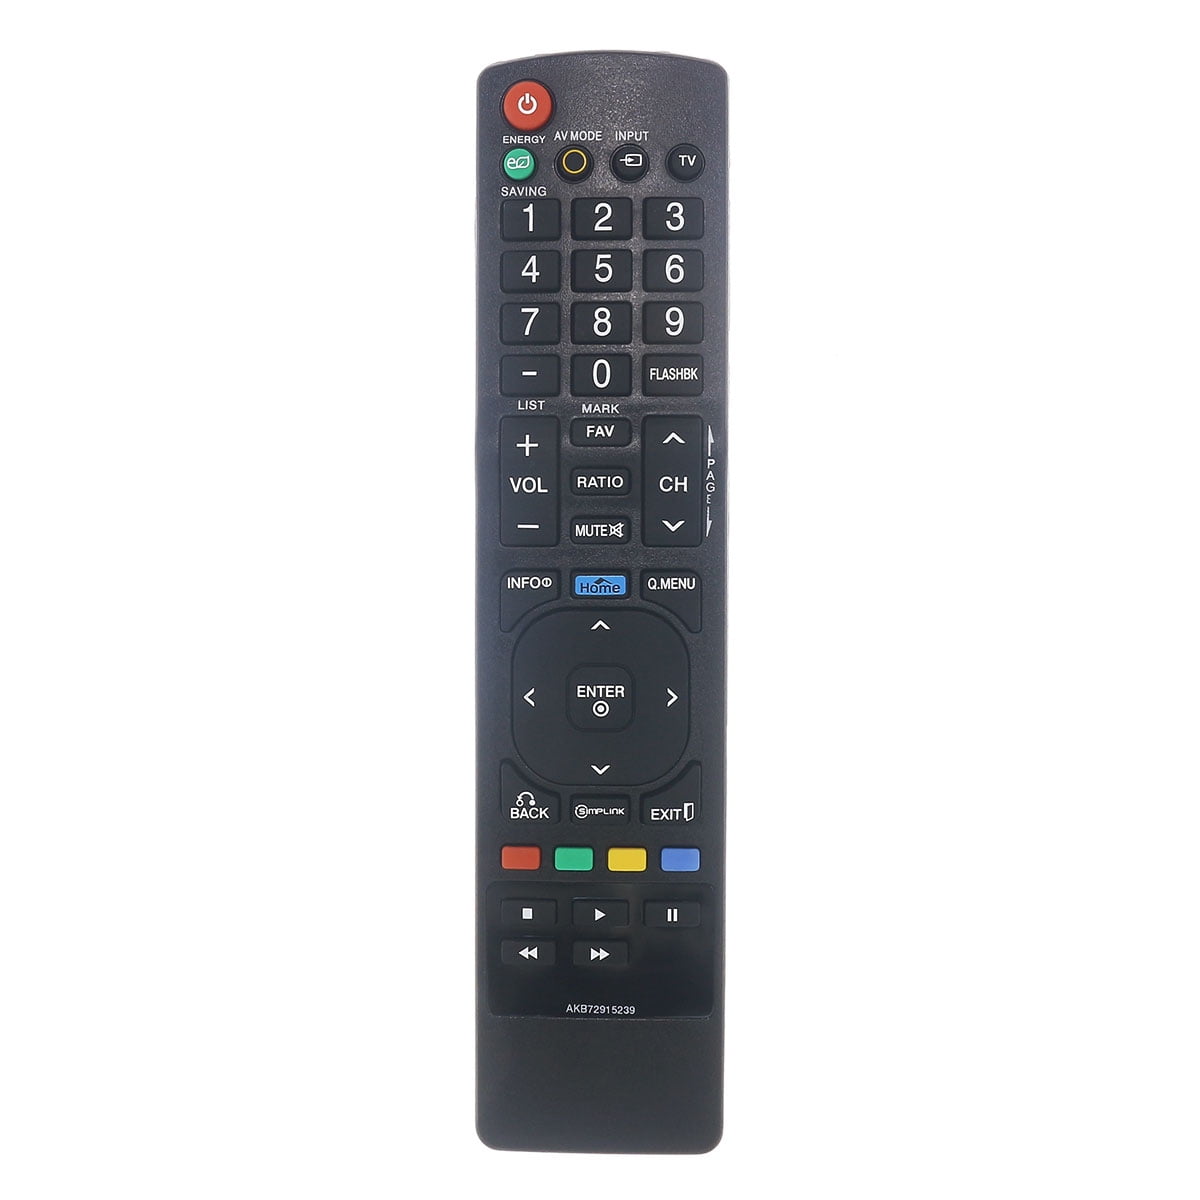 DEHA TV Remote Control for LG 37LK450-UB Television